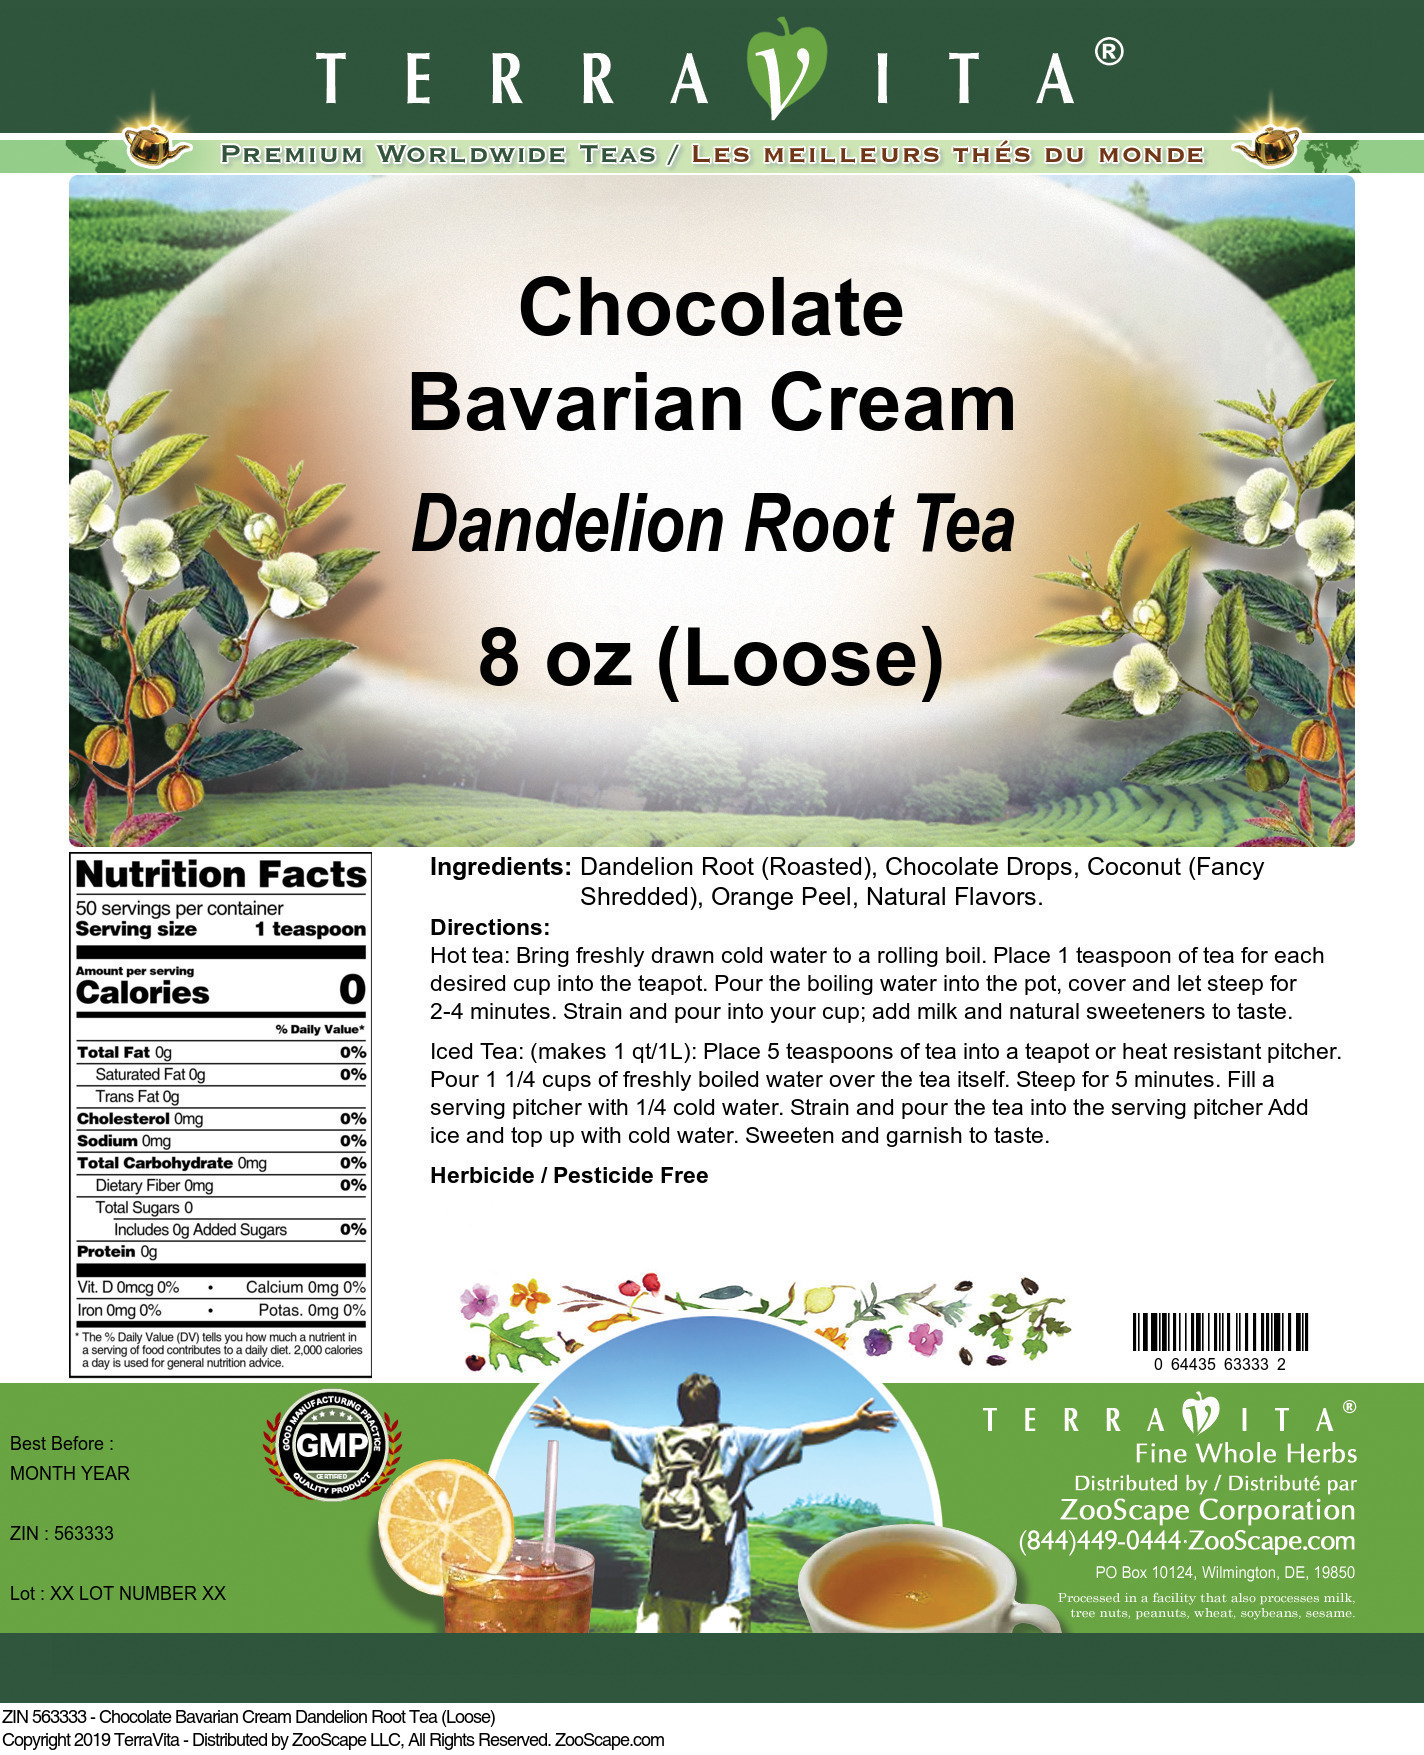 Chocolate Bavarian Cream Dandelion Root Tea (Loose) - Label